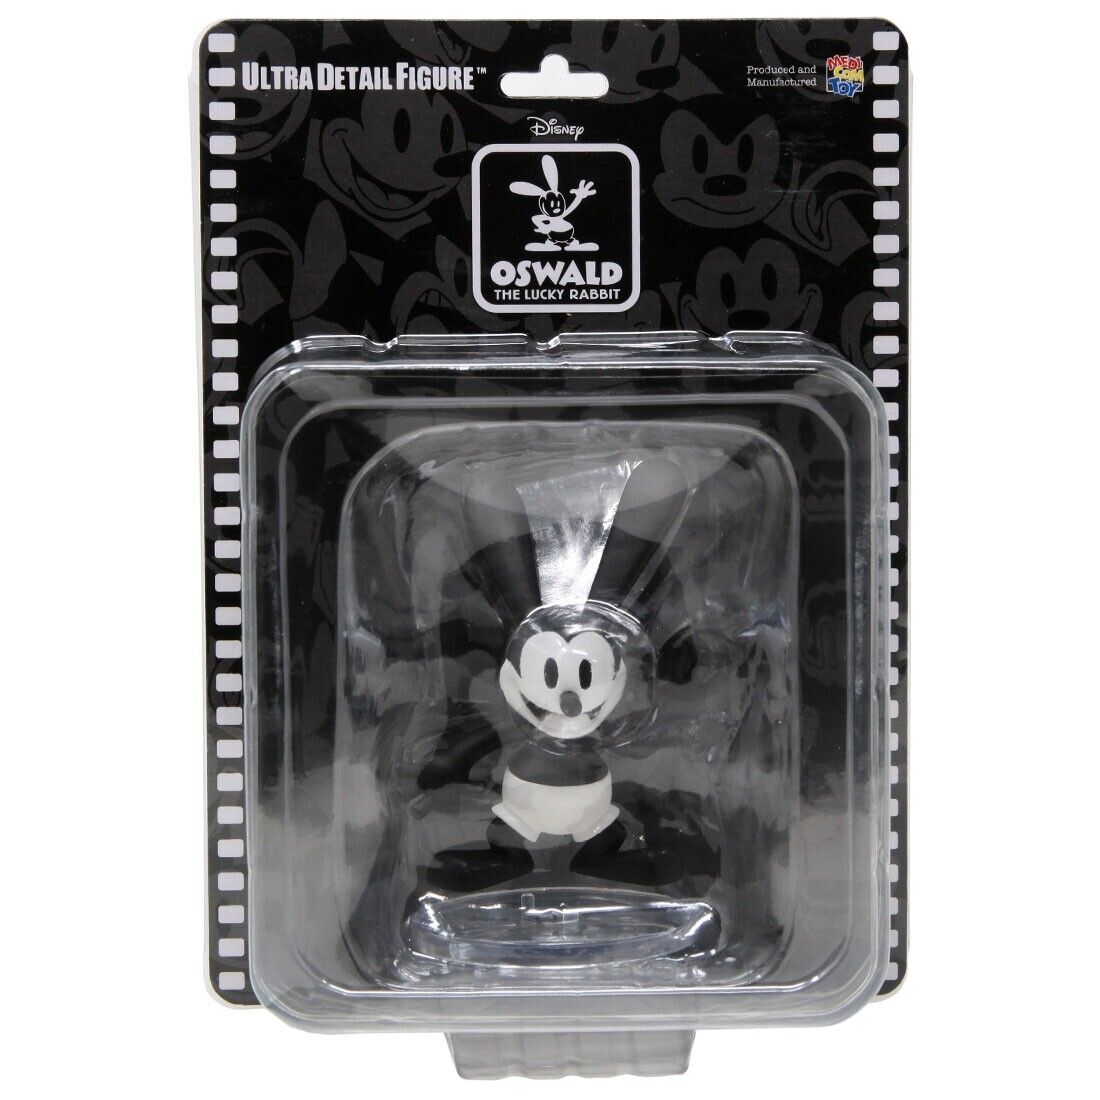 Medicom UDF Disney Series 10 Oswald The Lucky Rabbit Ultra Detail Figure black